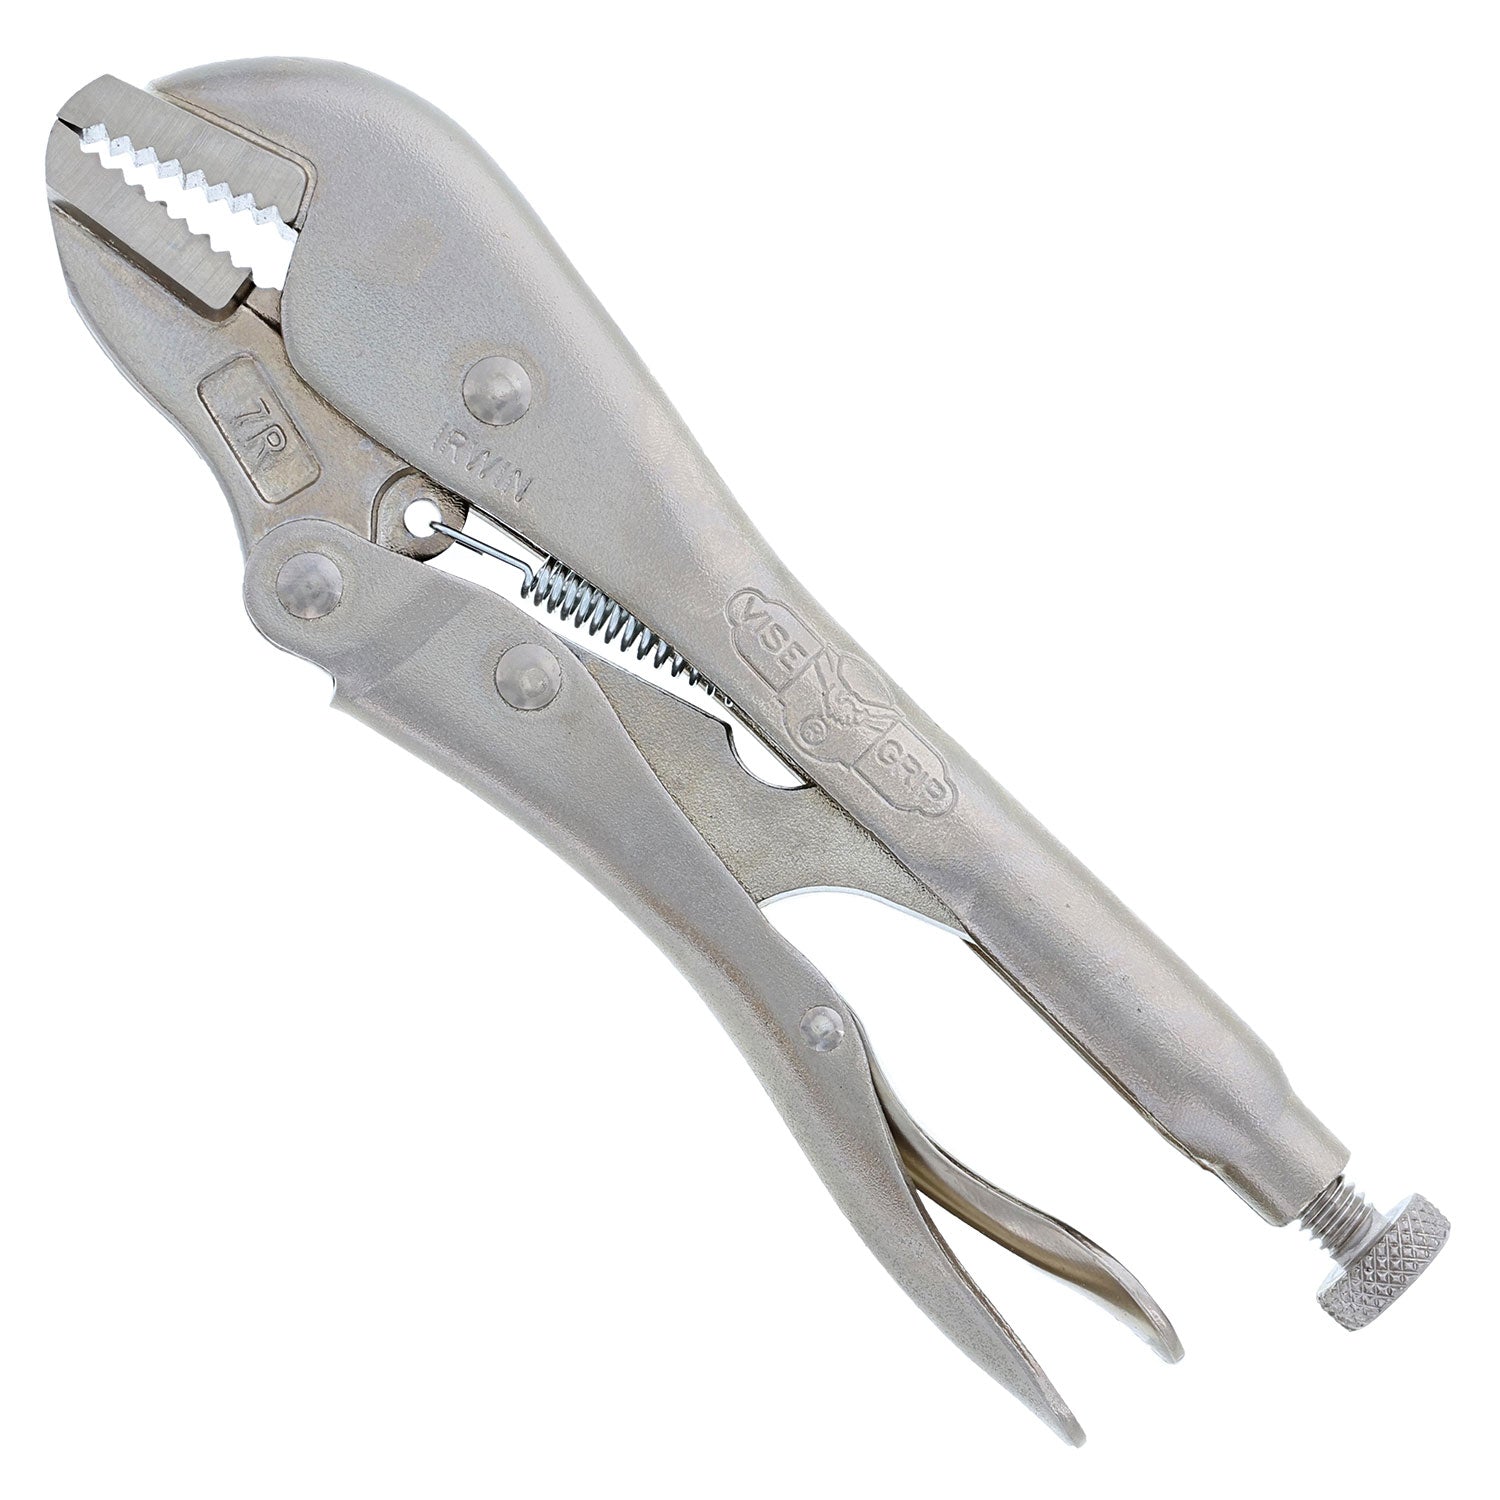 10"/250mm inch Jaw Locking Plier Mole Grips Vice Grip Pliers Tool New 